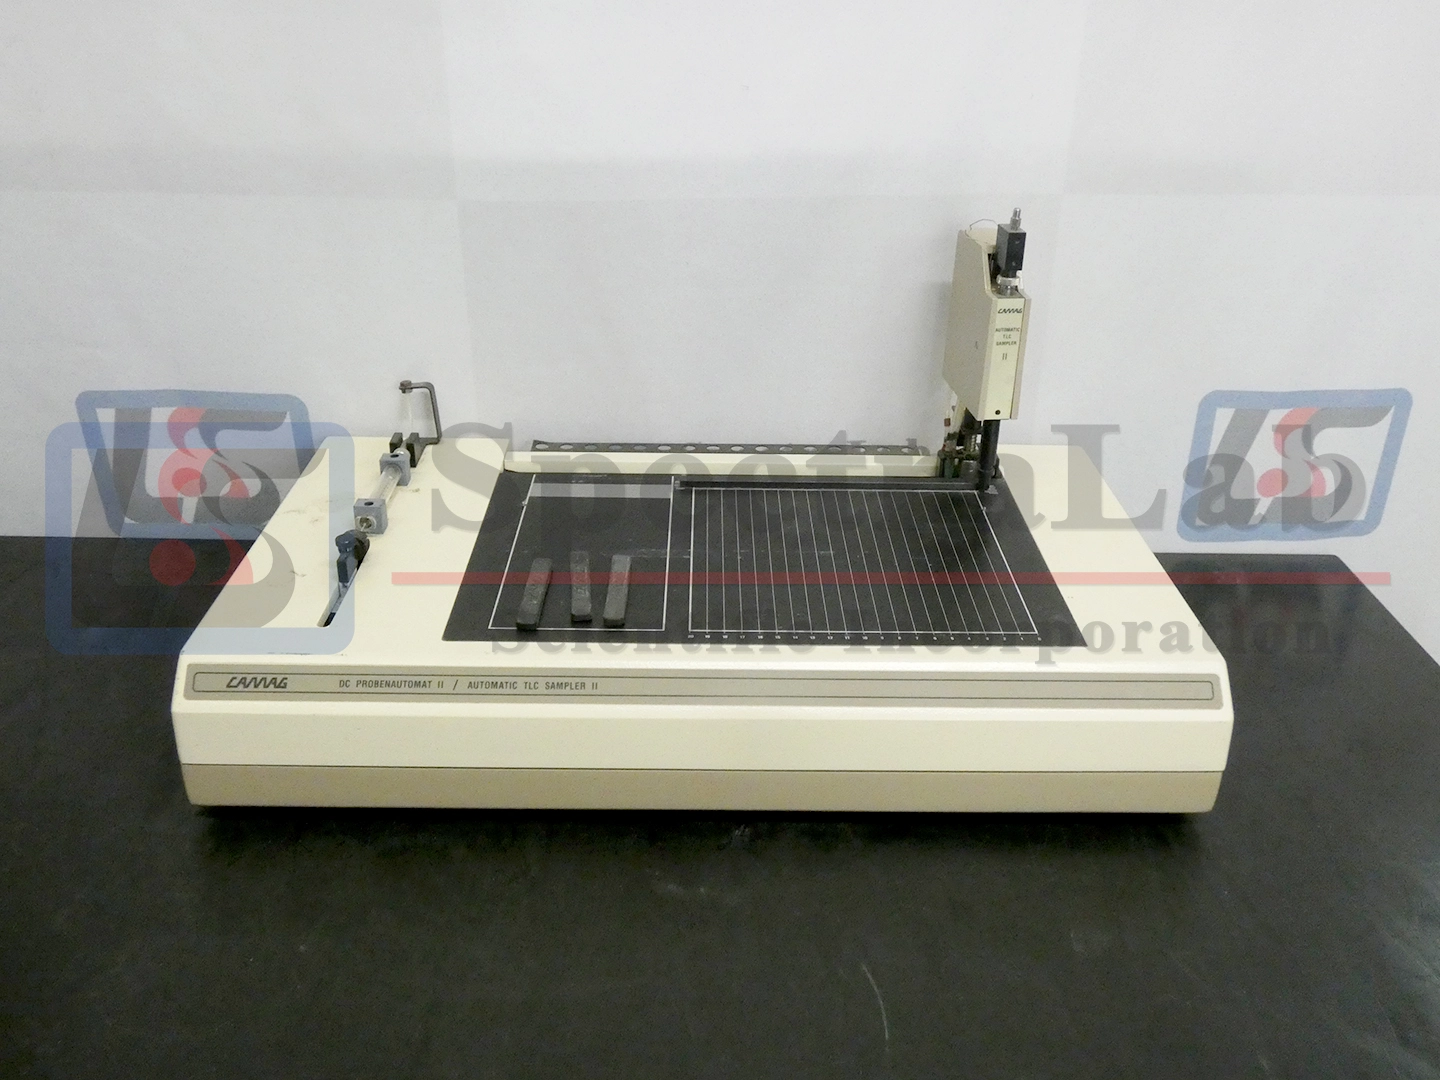 Camag DC Probenautomat II/ Automatic TLC Sampler II